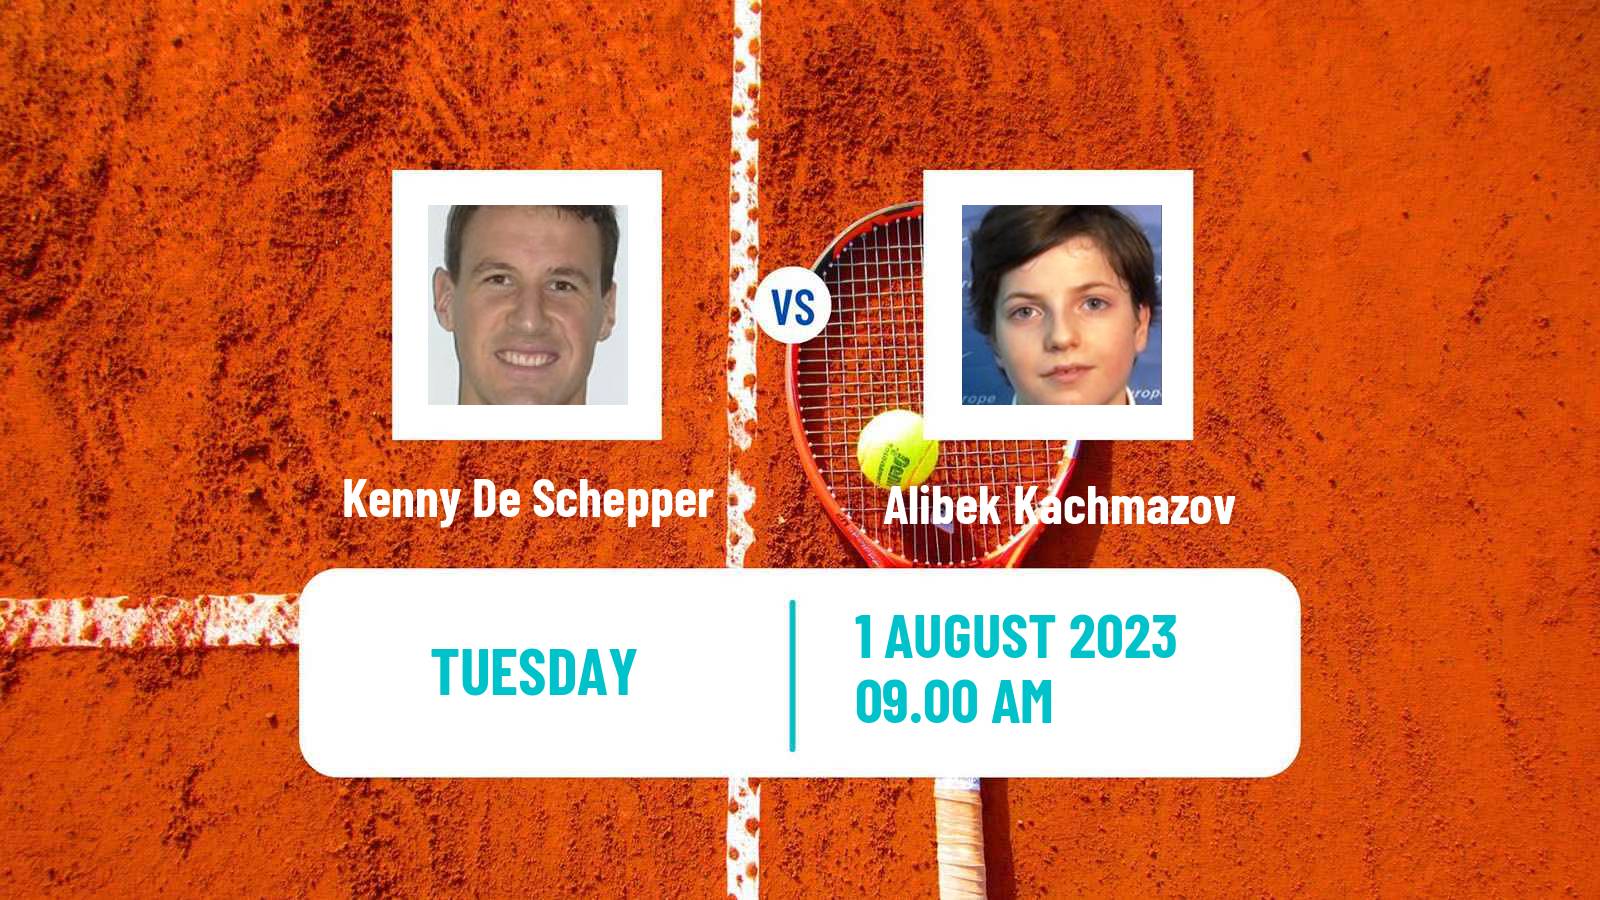 Tennis Porto Challenger Men Kenny De Schepper - Alibek Kachmazov